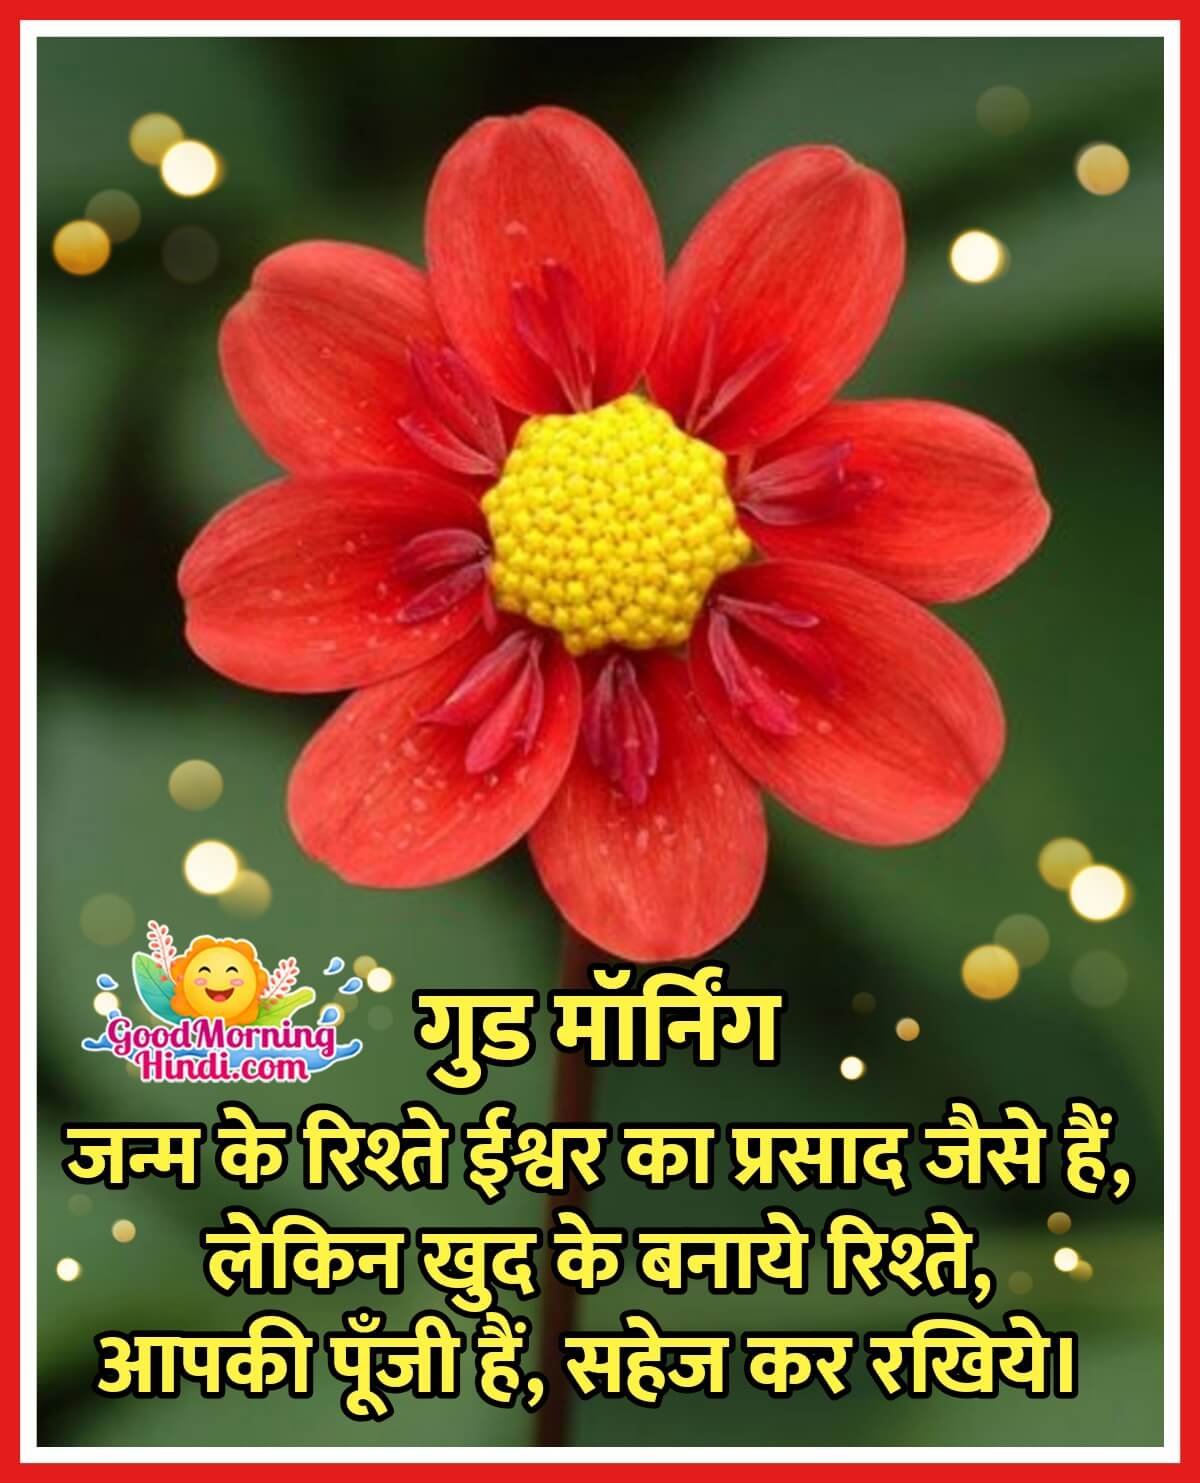 Good Morning Hindi Message On Relationship